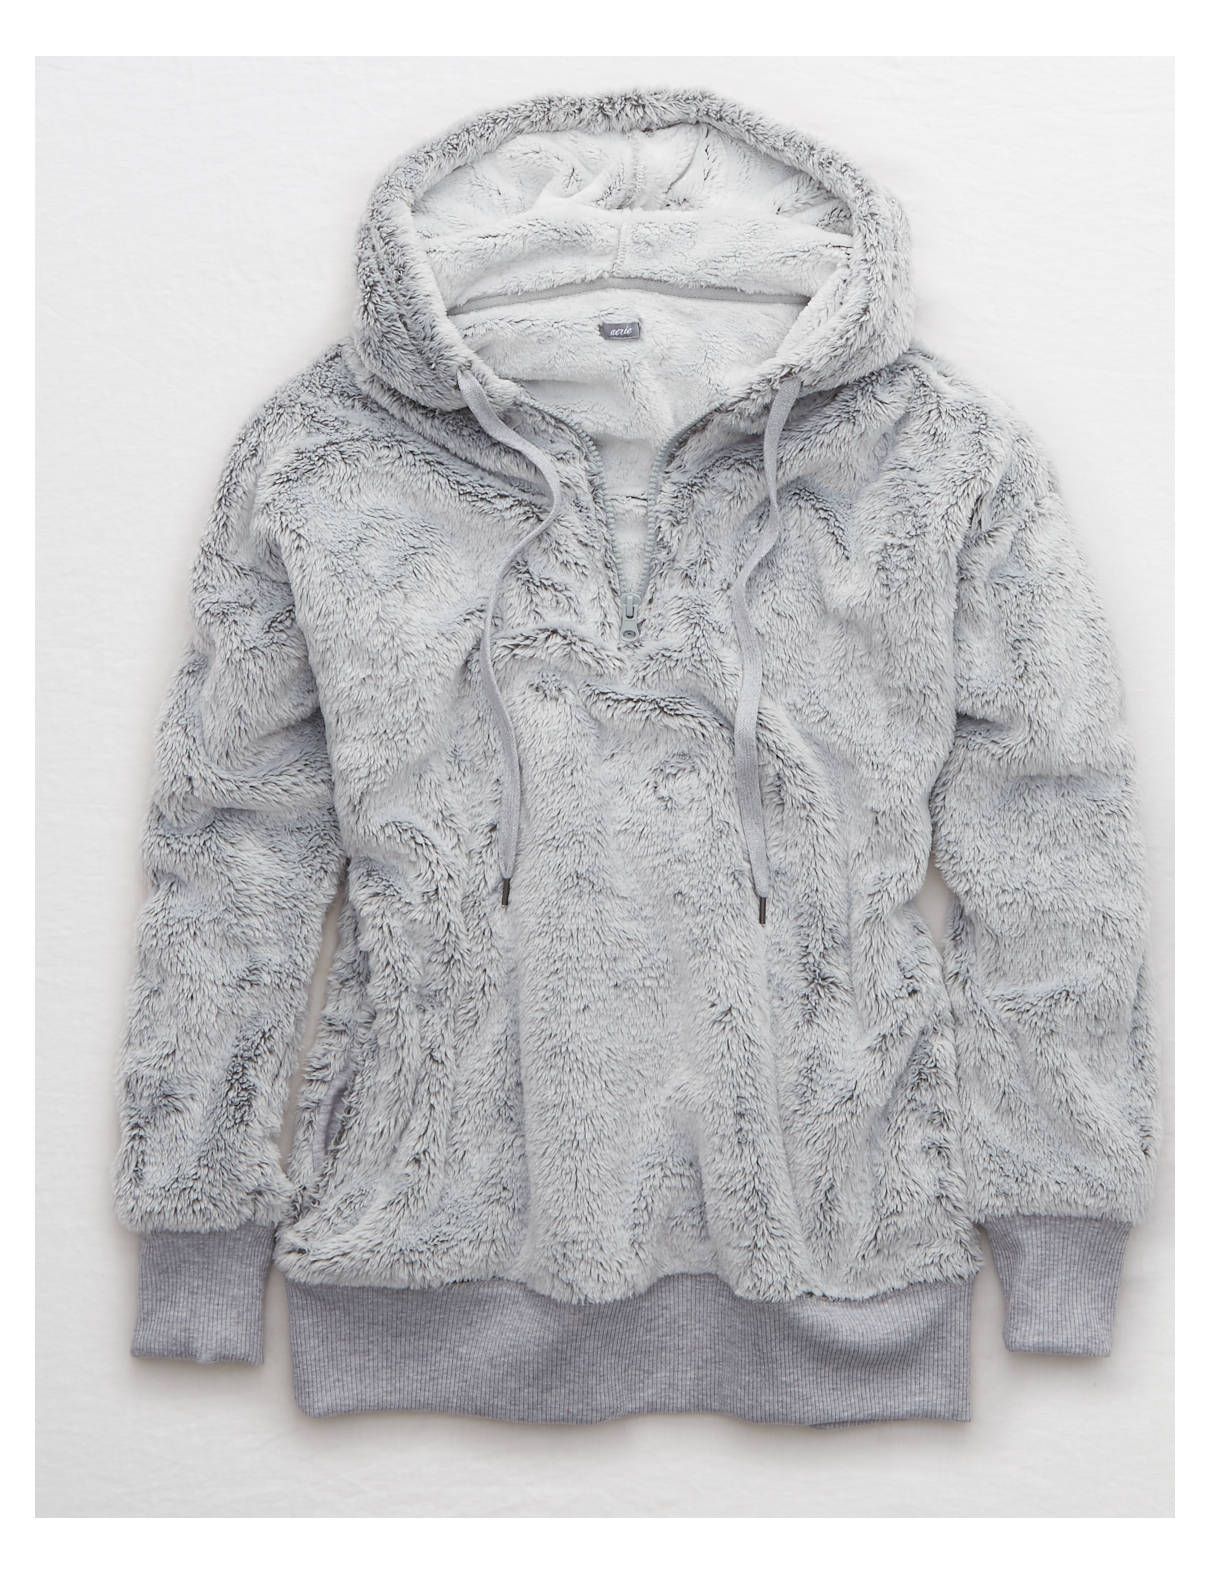 Aerie Cozy Quarter Zip Sweatshirt, Medium Heather | American Eagle Outfitters (US & CA)